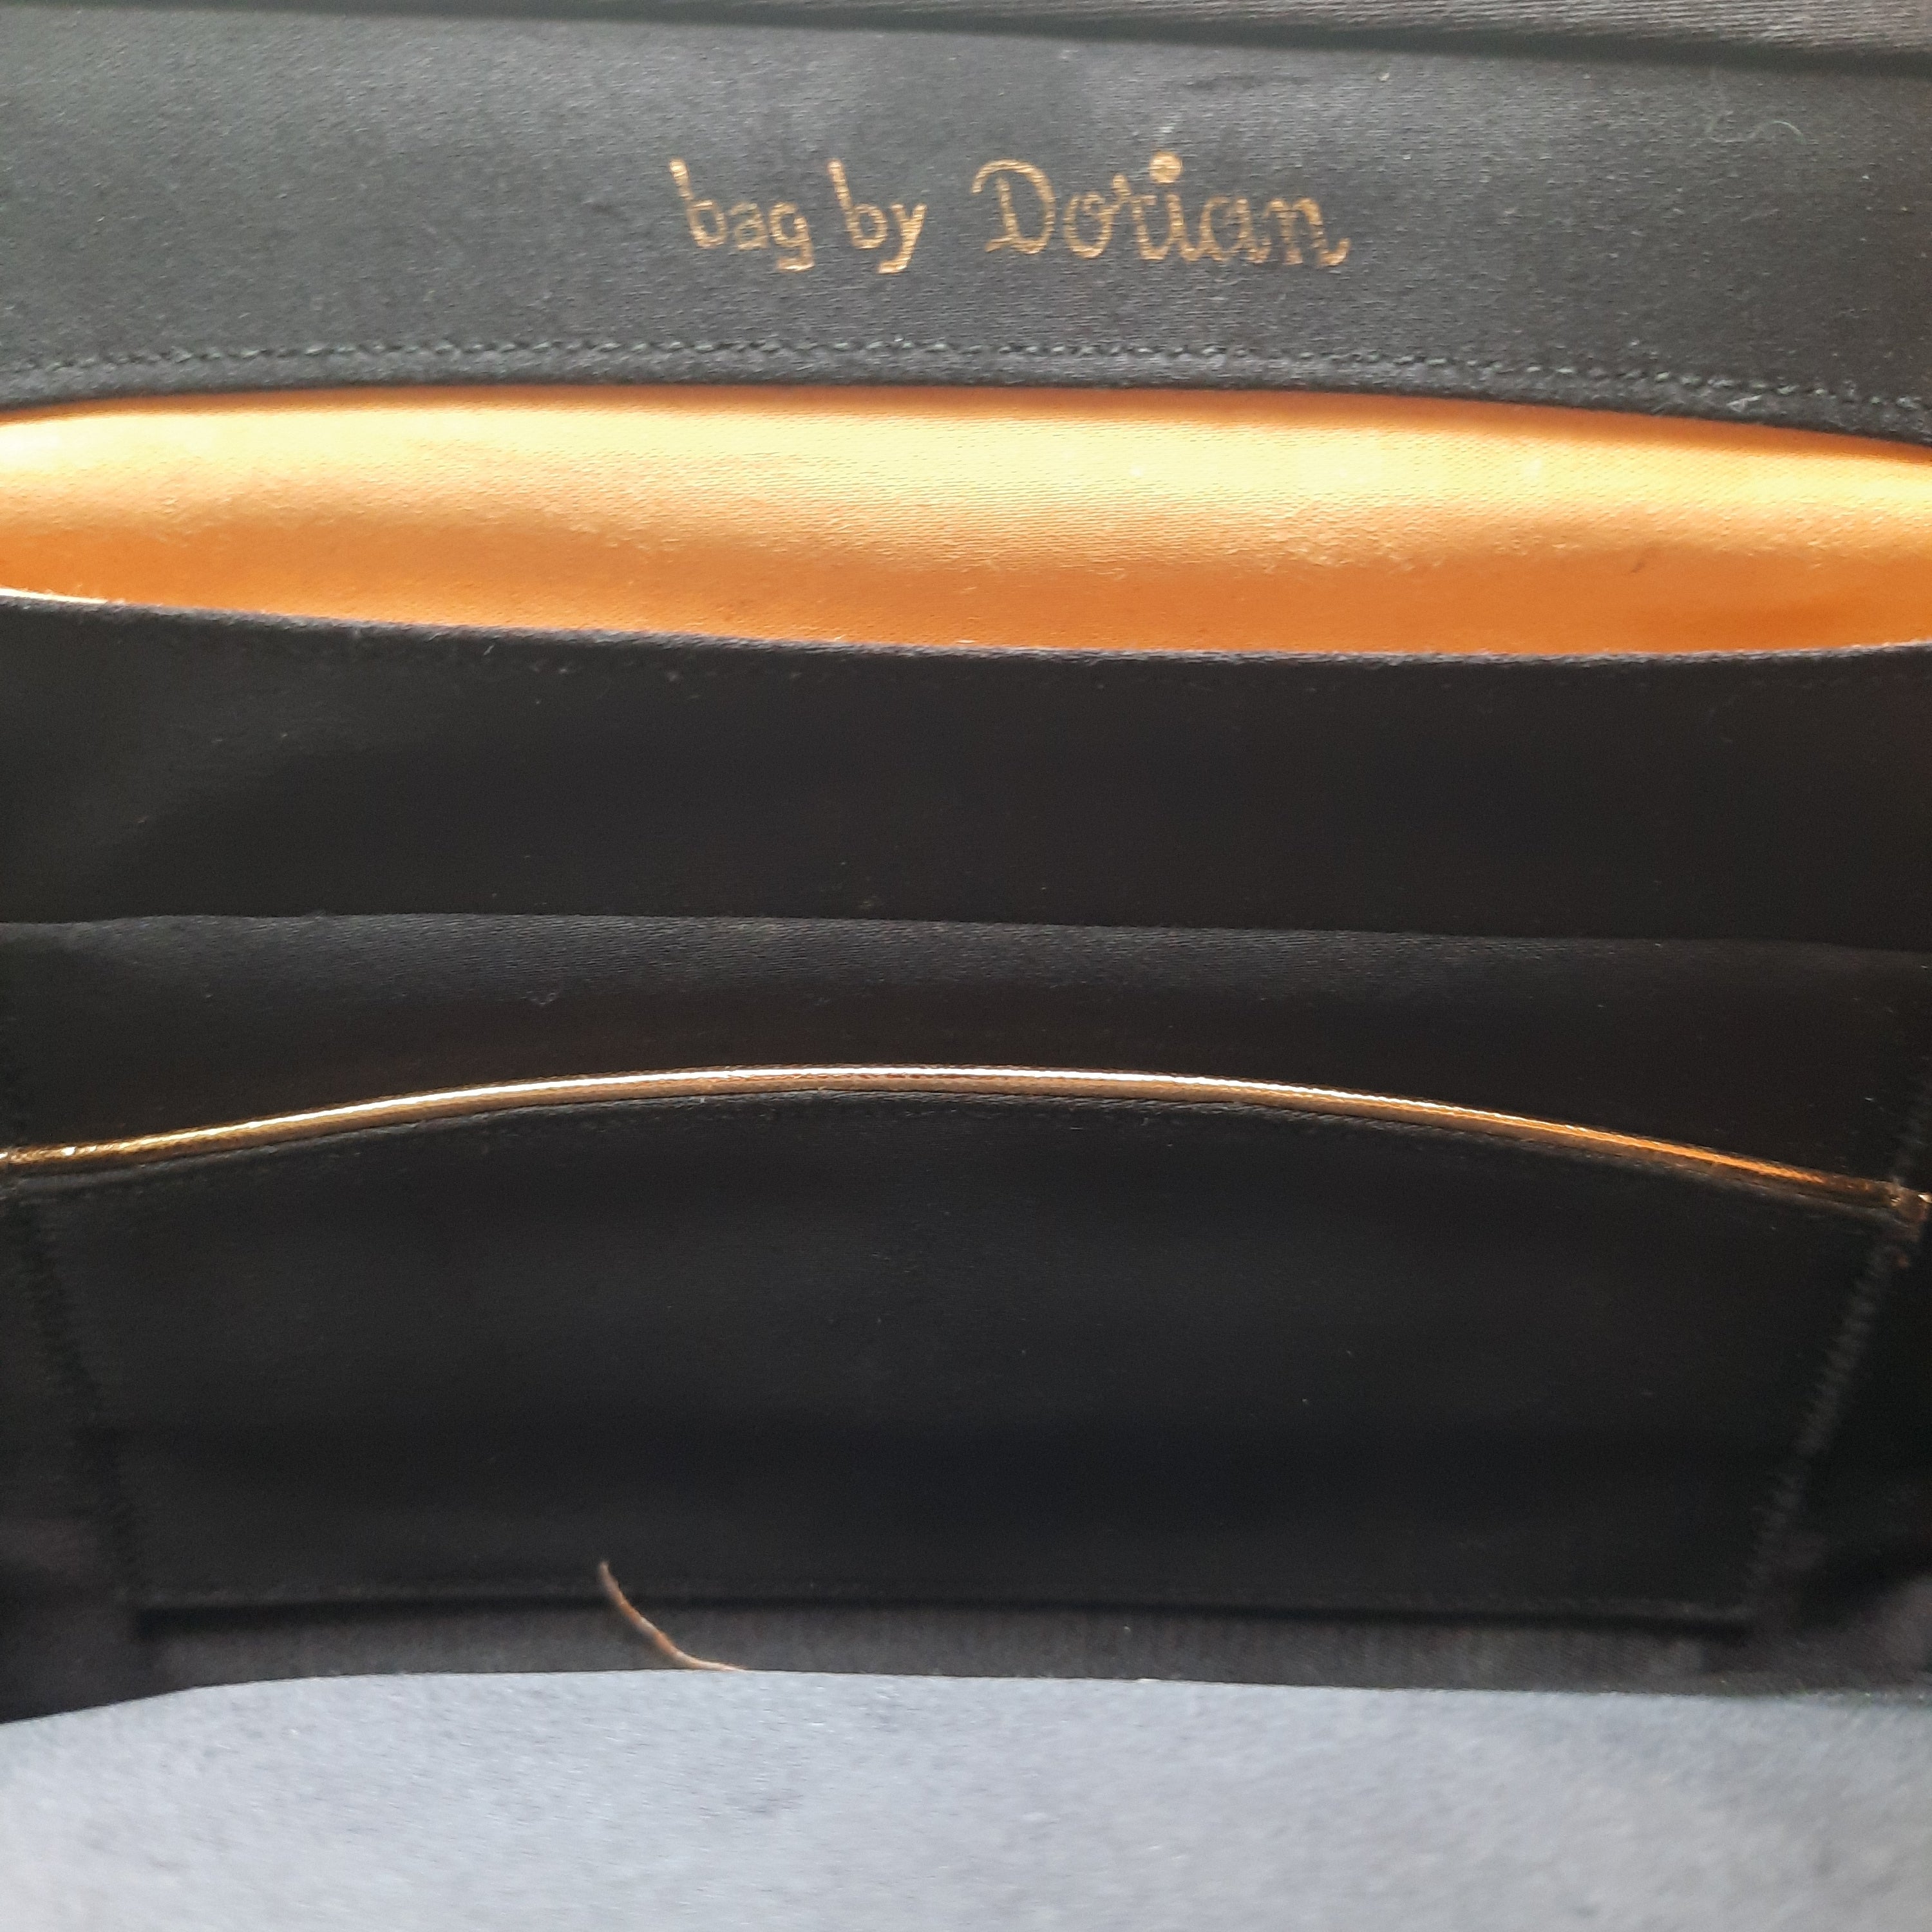 1950s Vintage Black Satin Clutch  Bag by Dorian – Lucille Golden